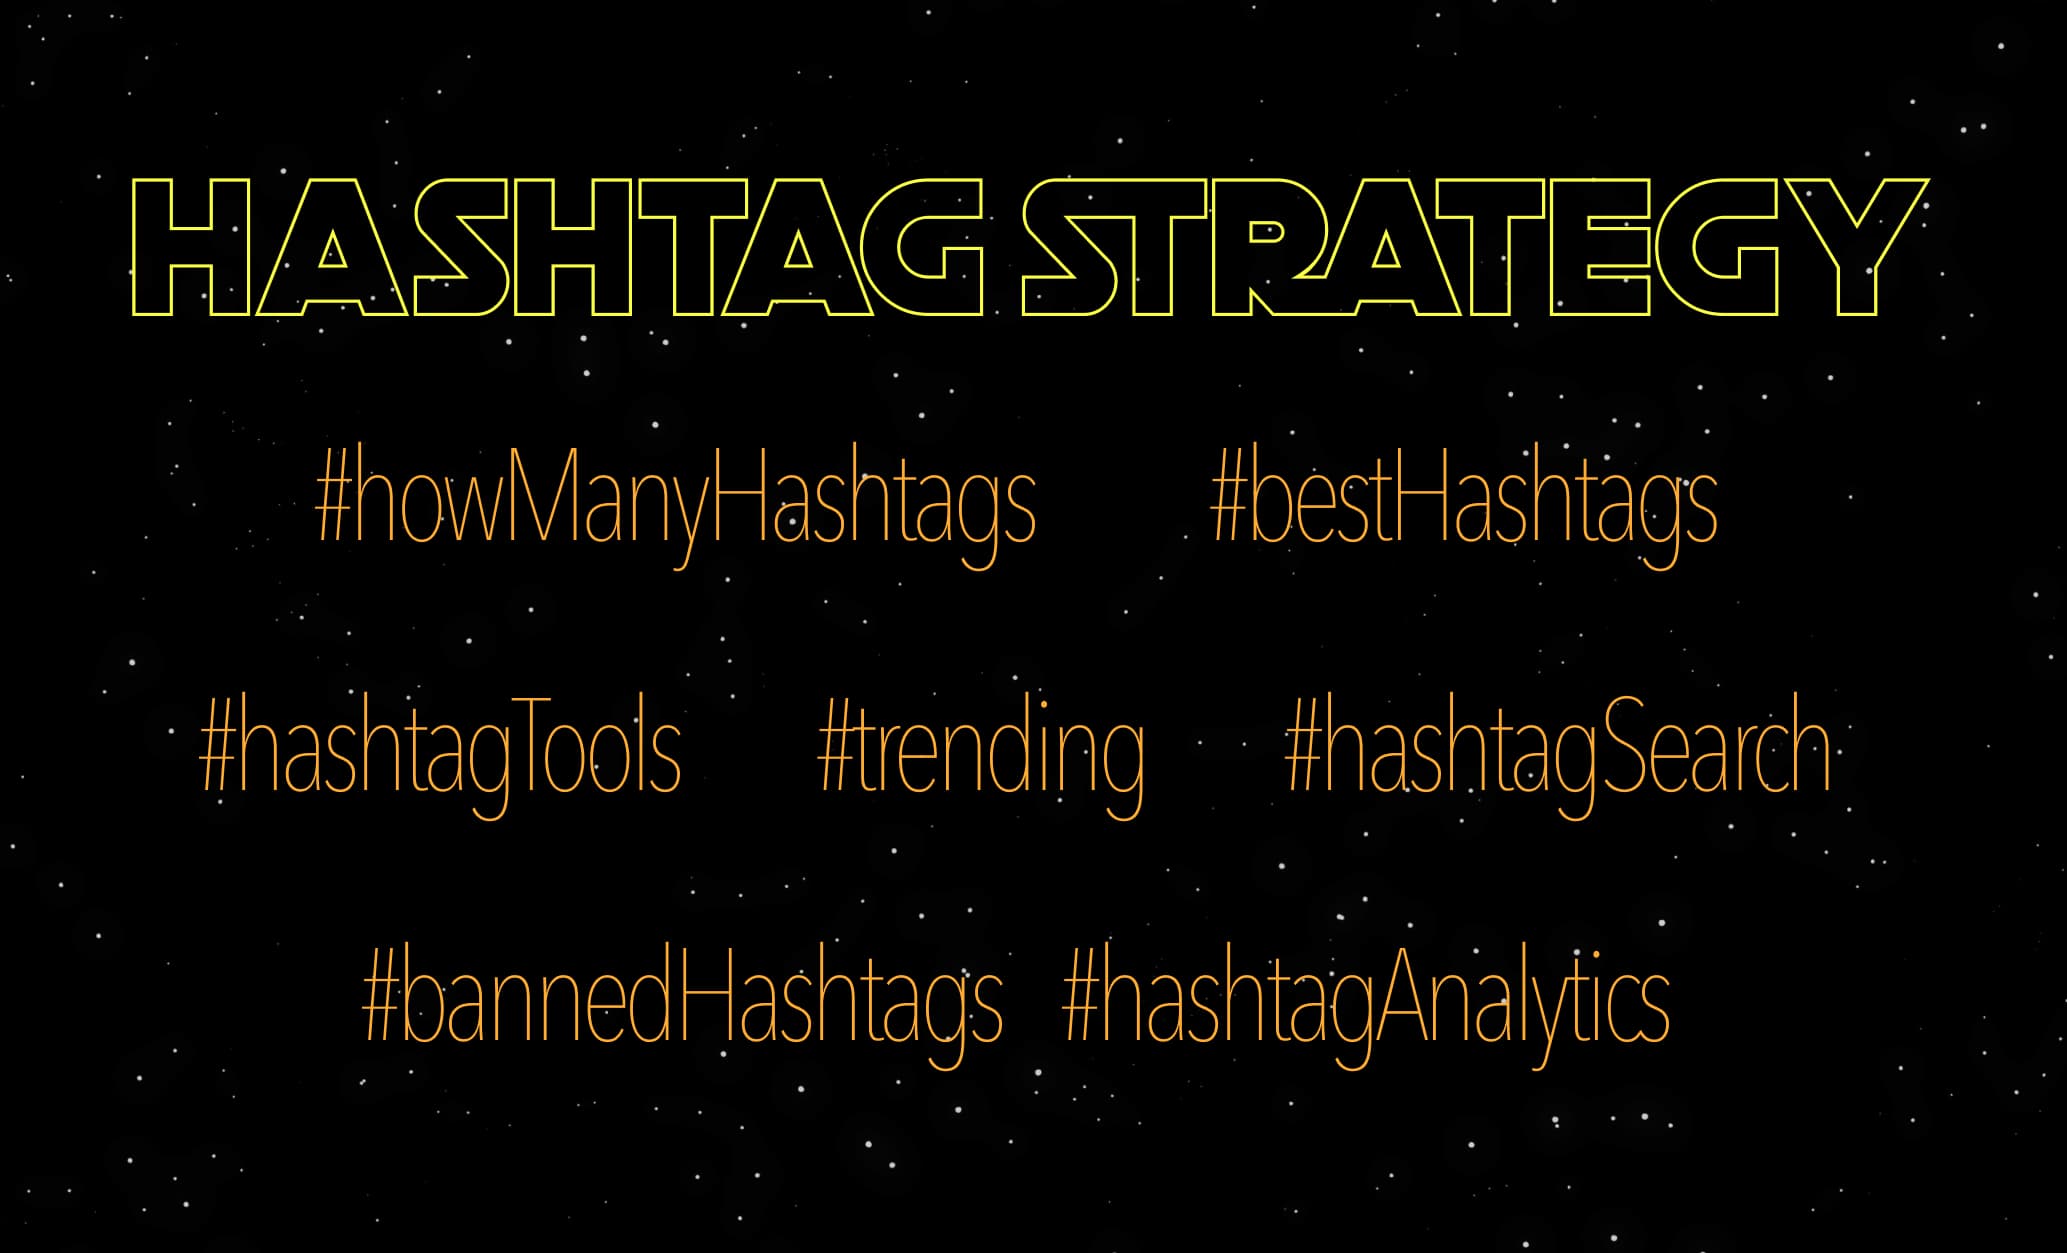 hashtag strategies